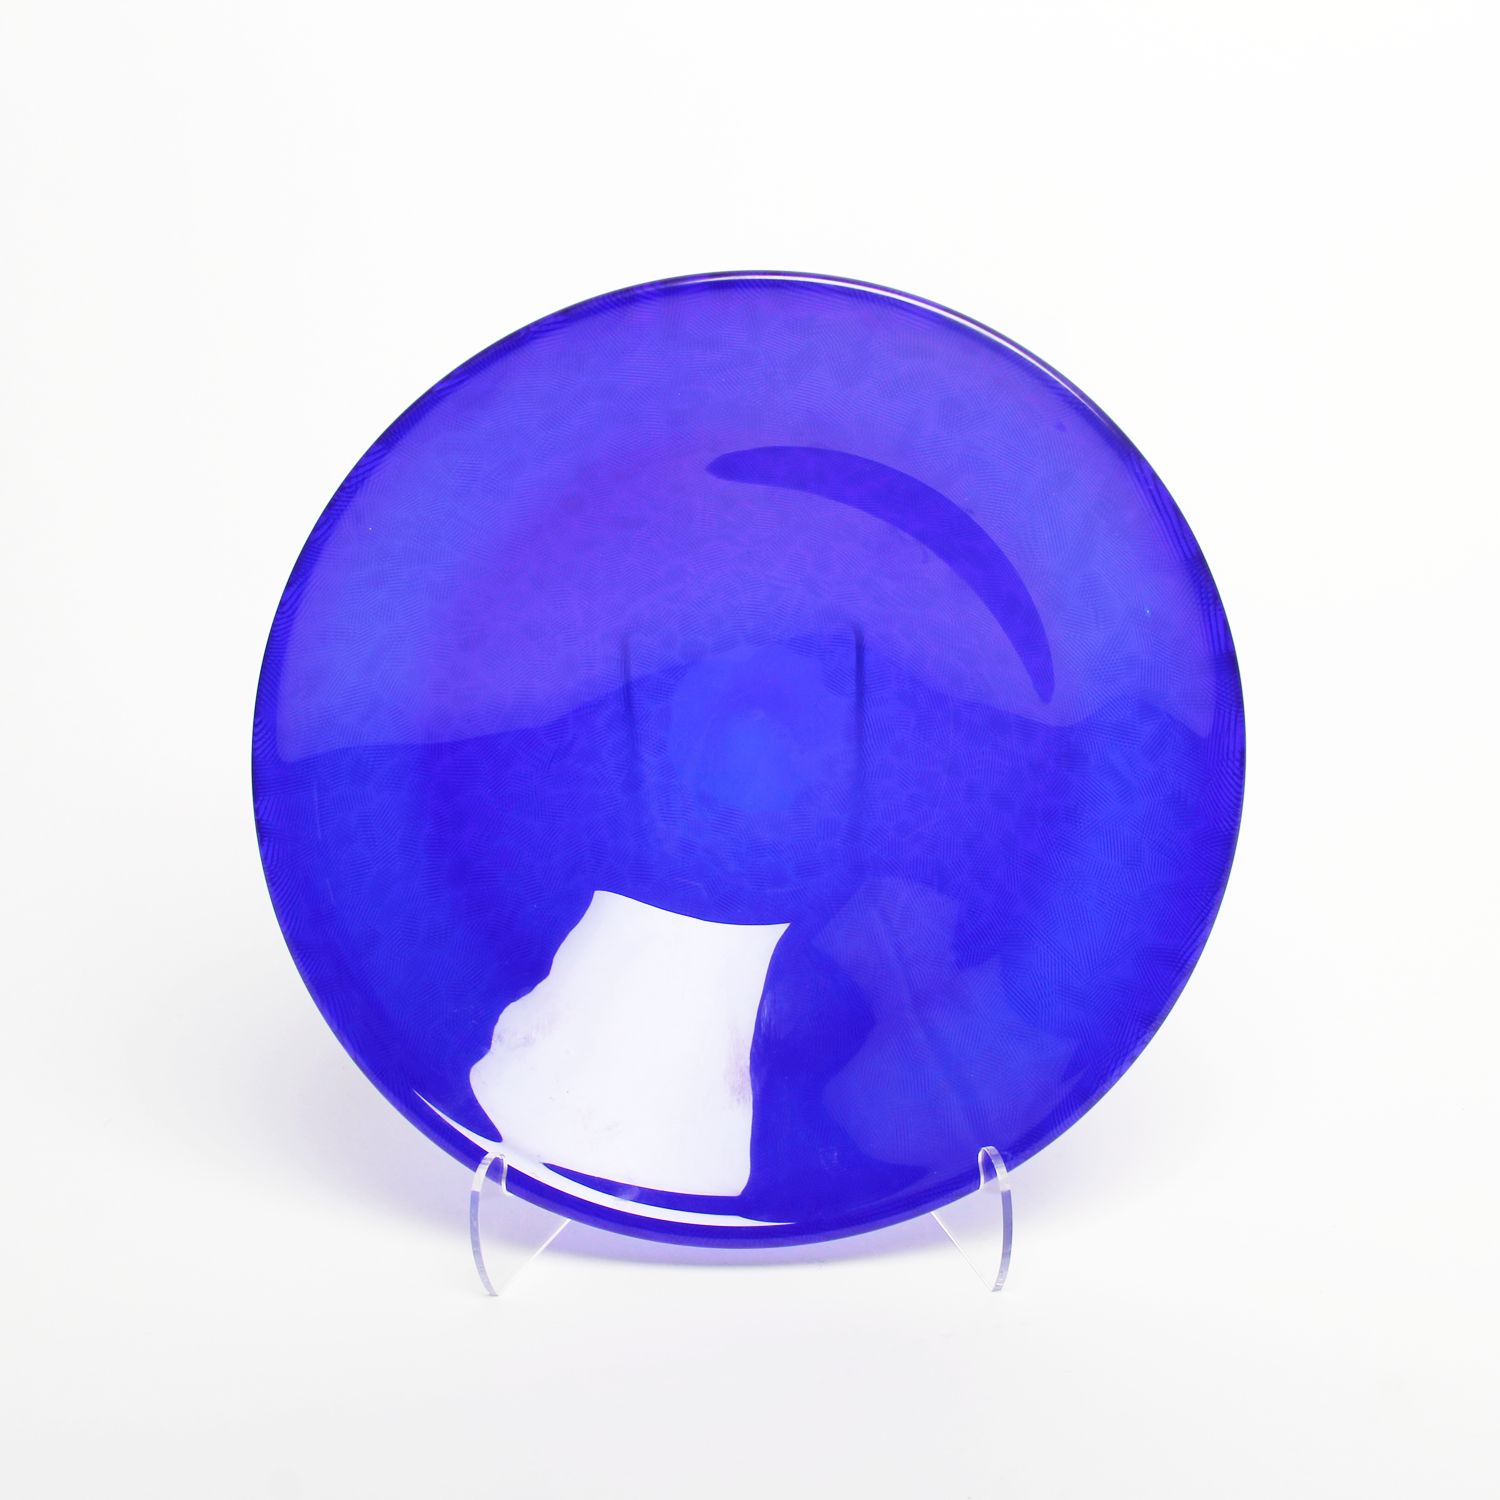 Gordon Boyd: Crosshatch Bowl in Blue Product Image 3 of 3